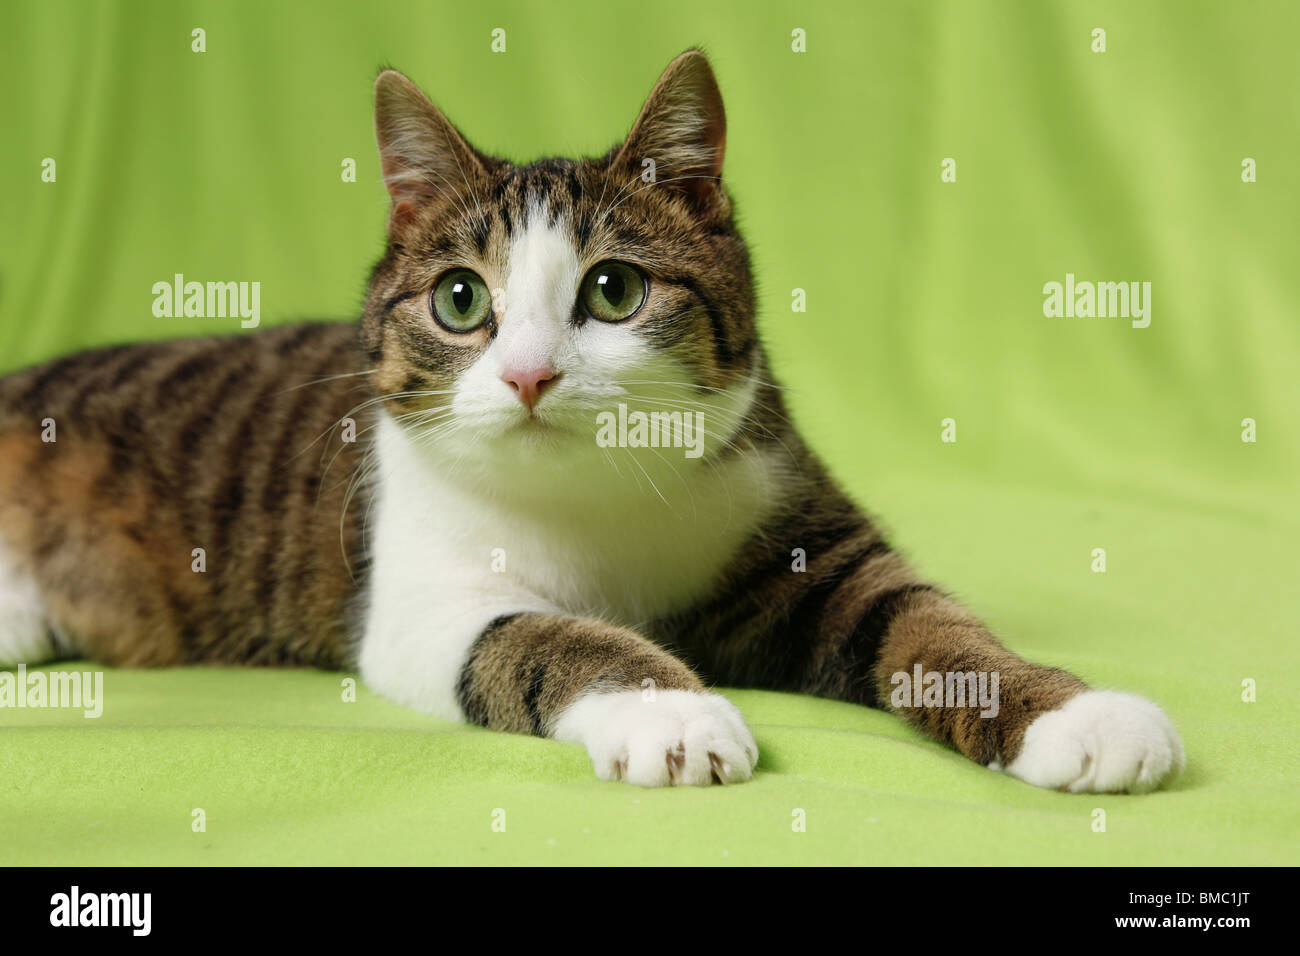 liegende Katze / lying cat Stock Photo